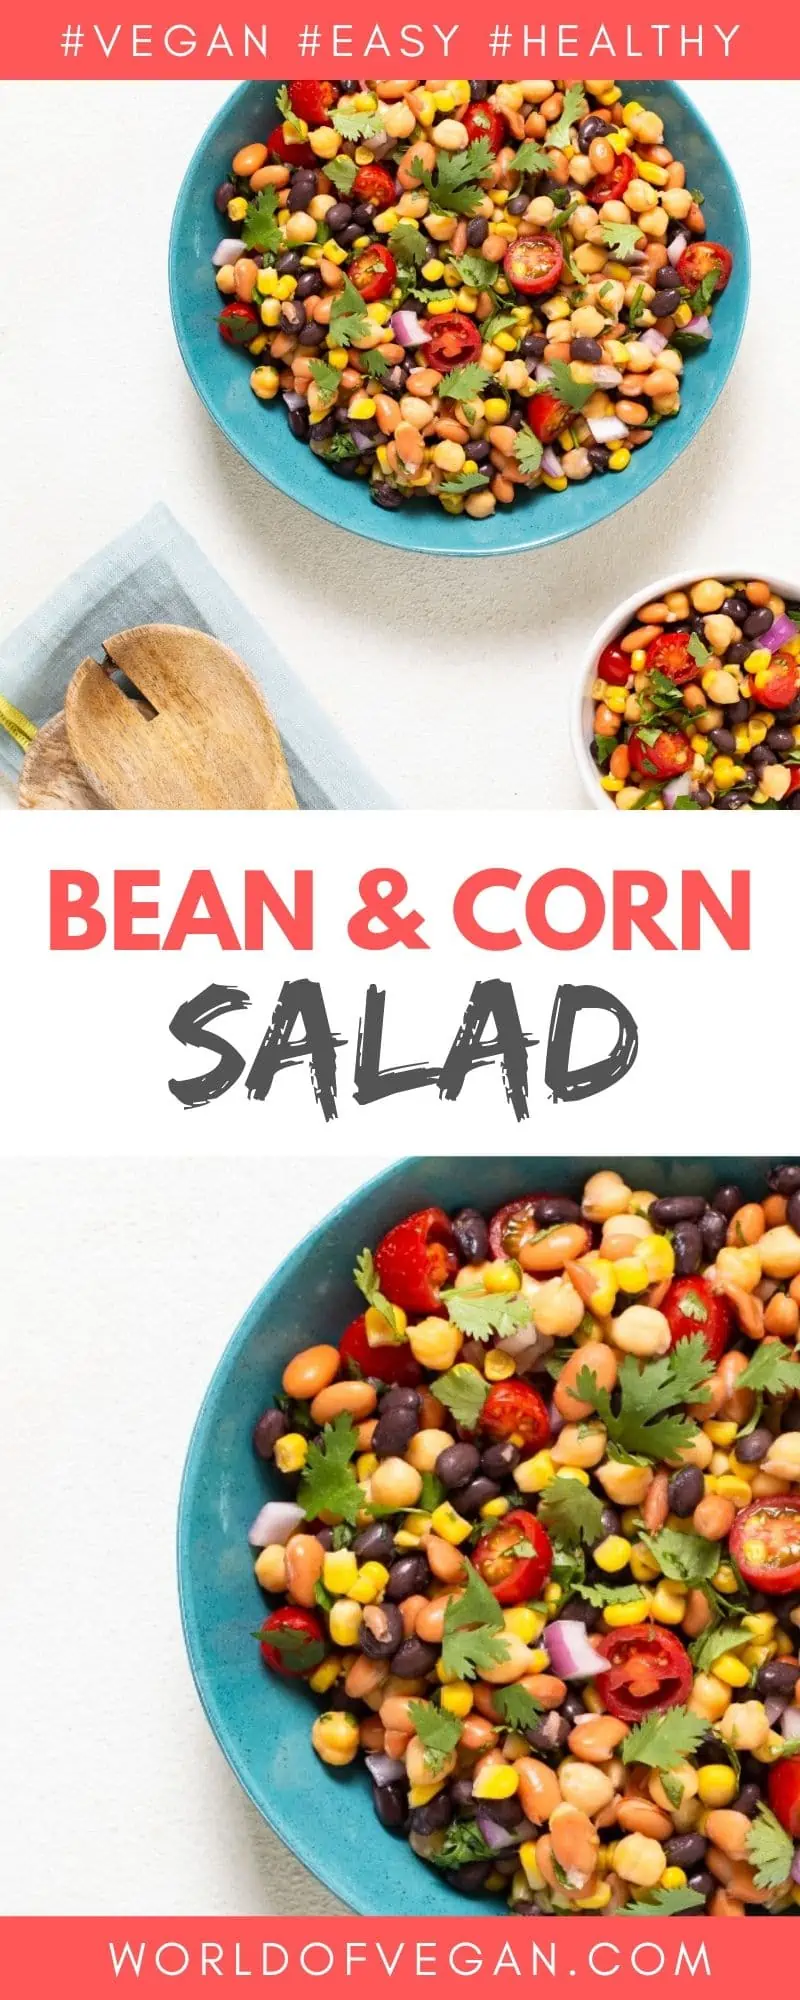 Bean & Corn Salad | WorldofVegan.com #vegan #vegetarian #recipe #healthy #mexican